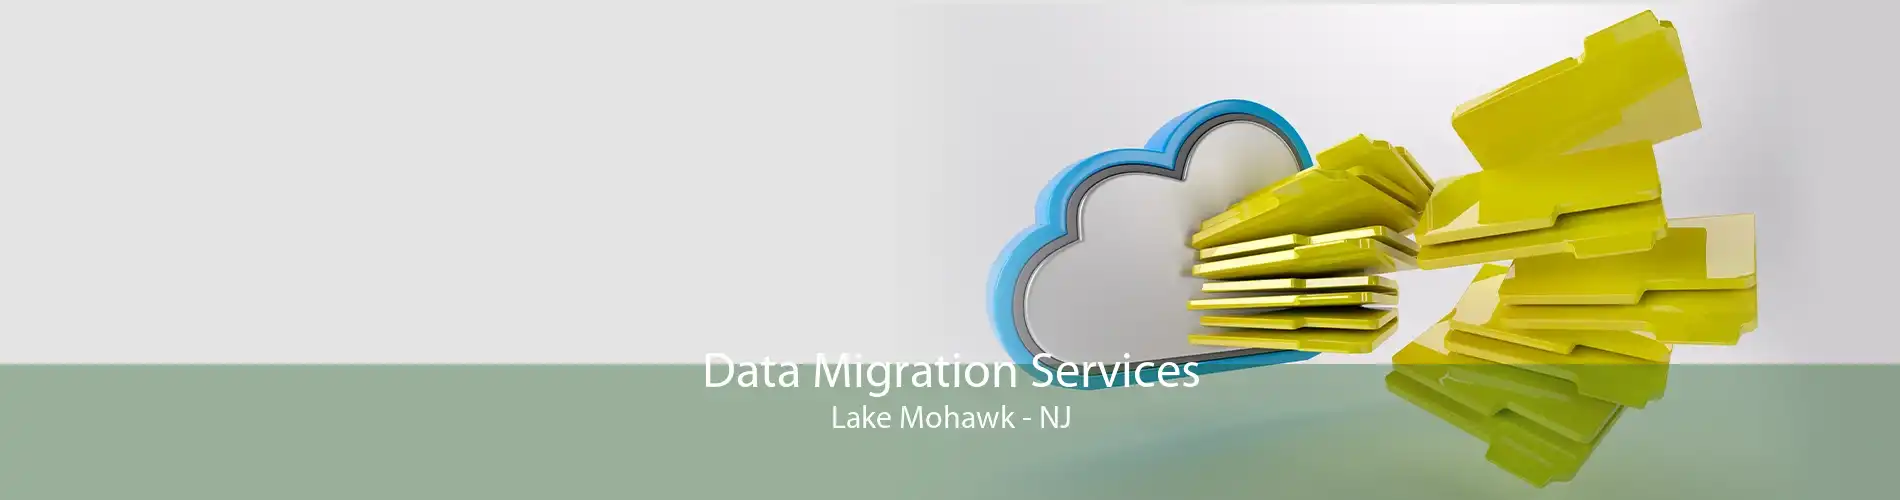 Data Migration Services Lake Mohawk - NJ